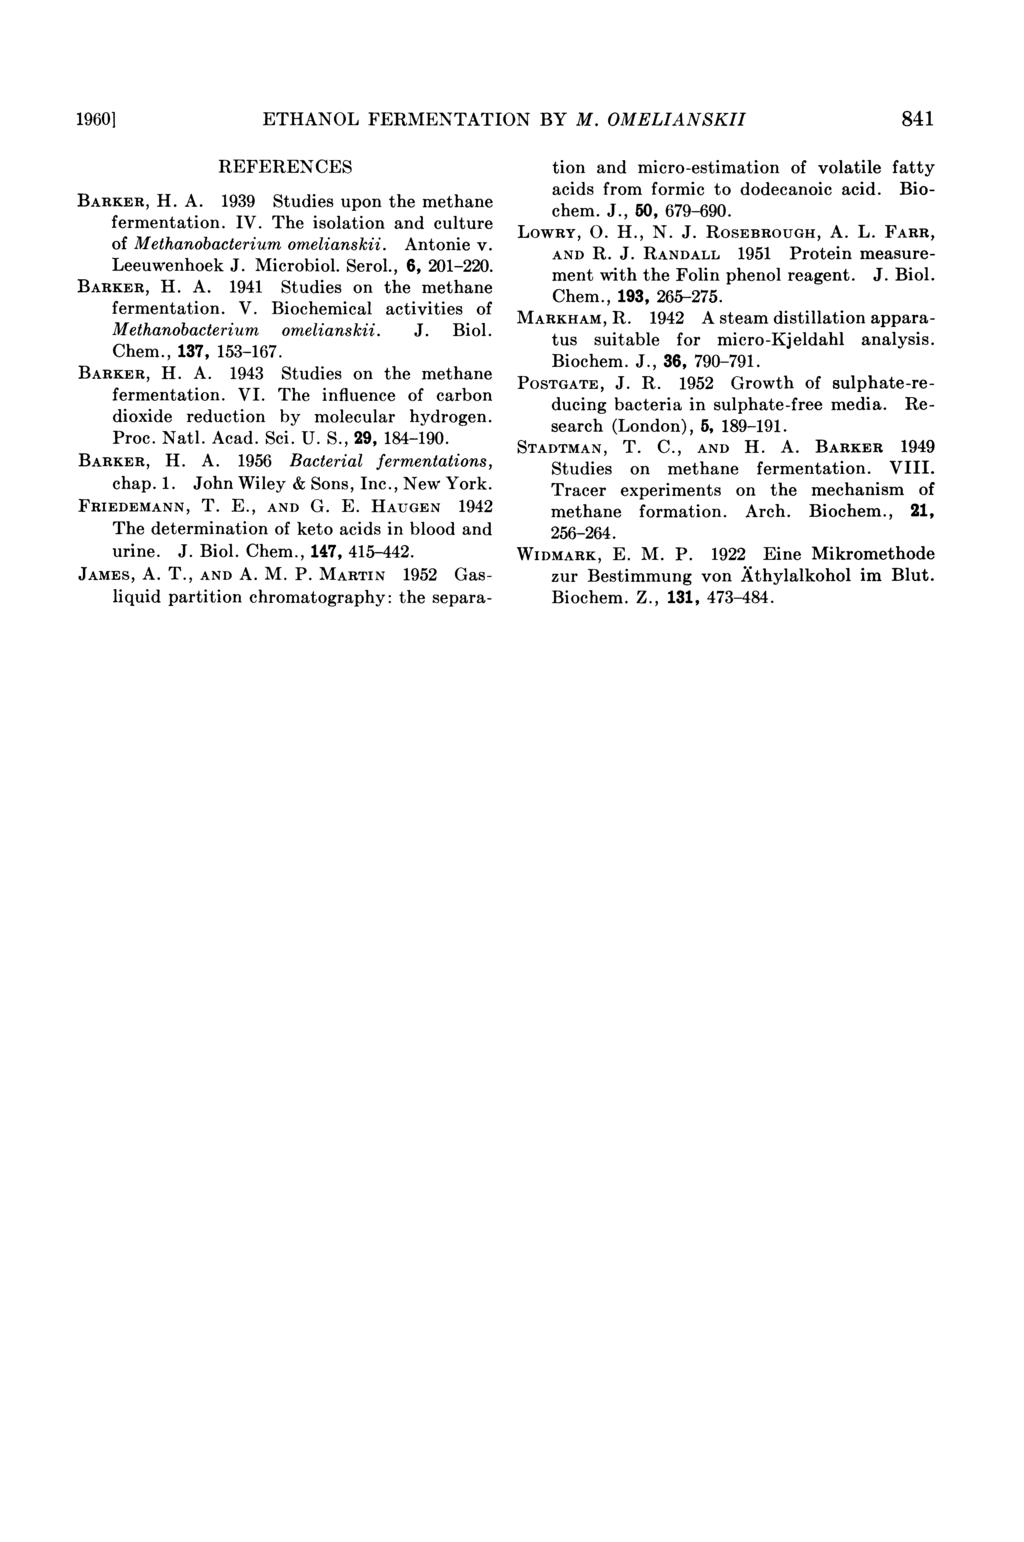 19601 ETHANOL FERMENTATION BY M. OMELIANSKII 841 REFERENCES BARKER, H. A. 1939 Studies upon the methane fermentation. IV. The isolation and culture of Methanobacterium omelianskii. Antonie v.